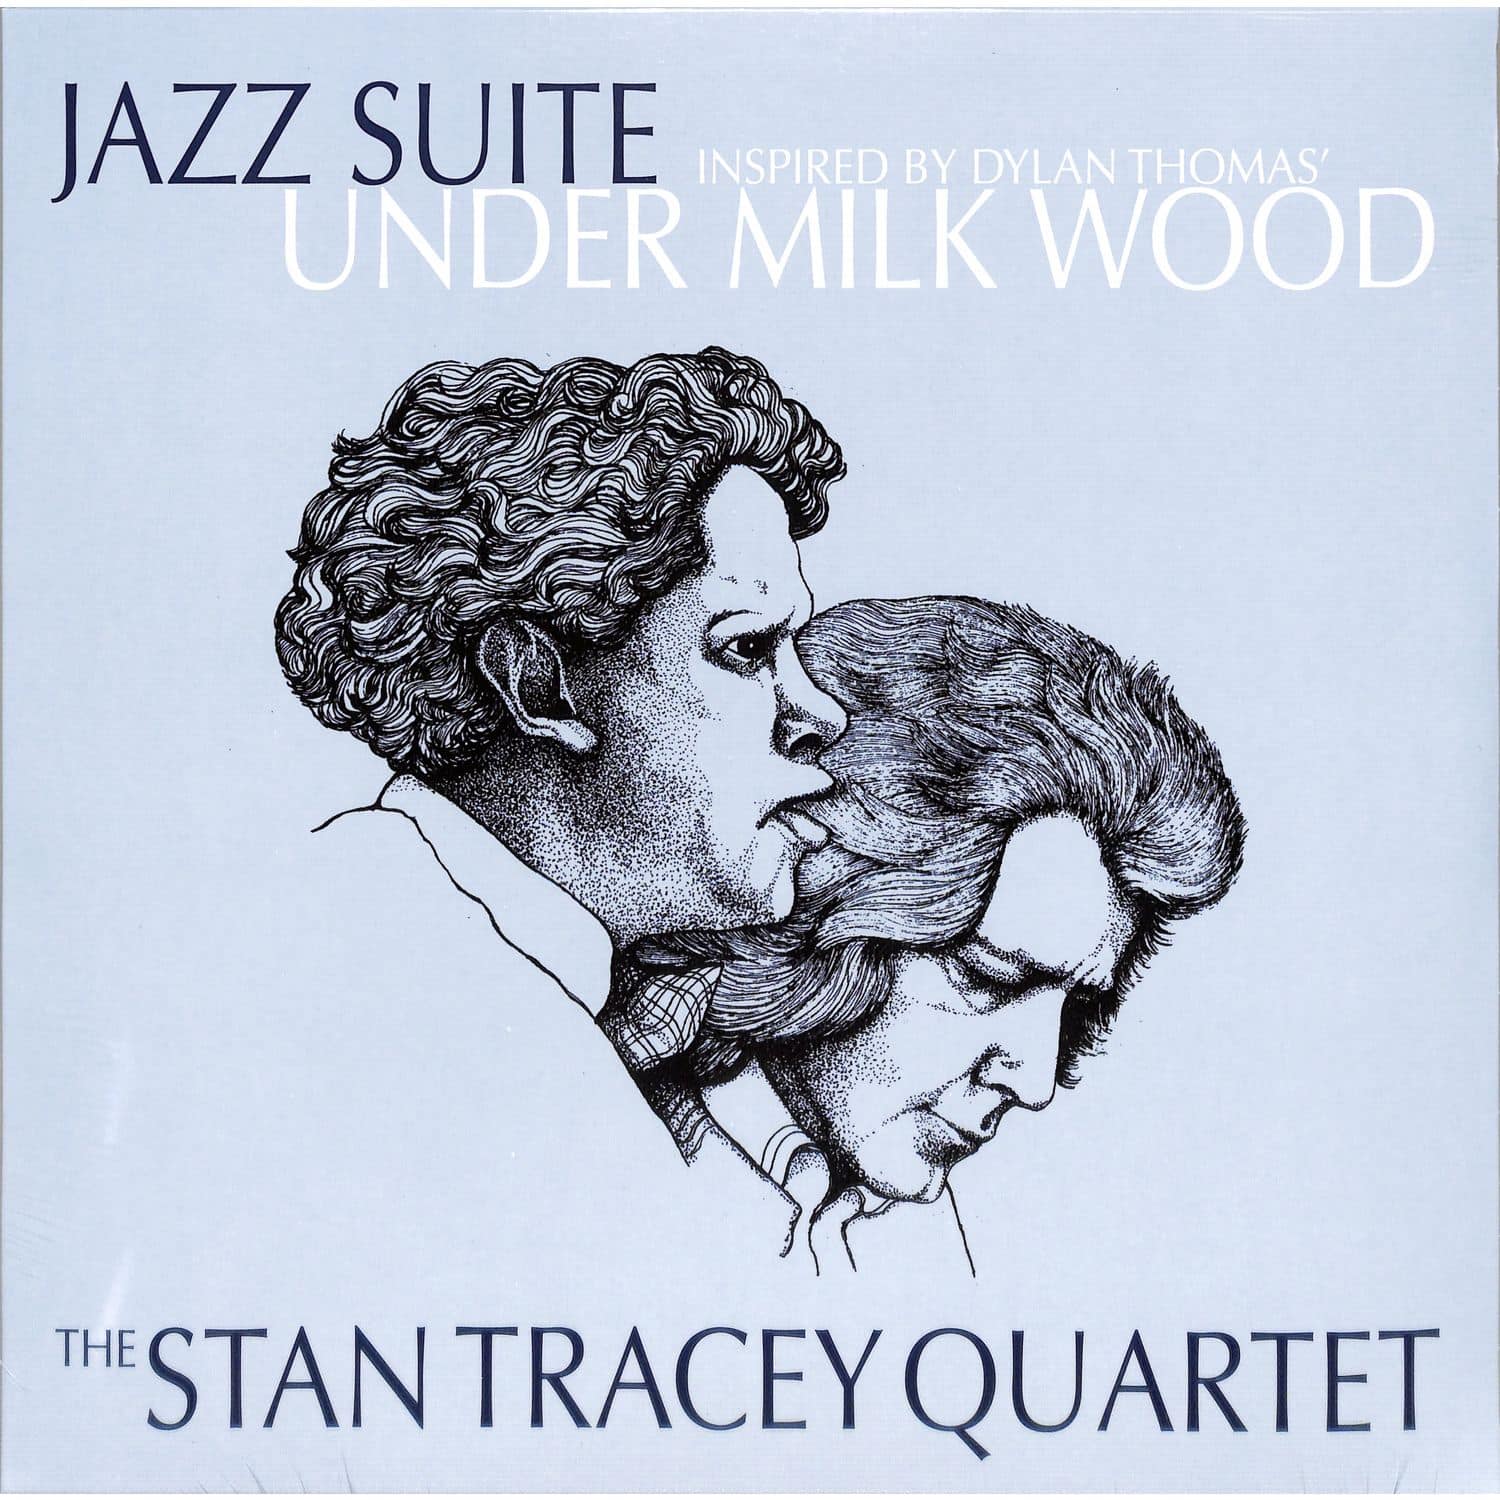  Stan-Quartet- Tracey - JAZZ SUITE 